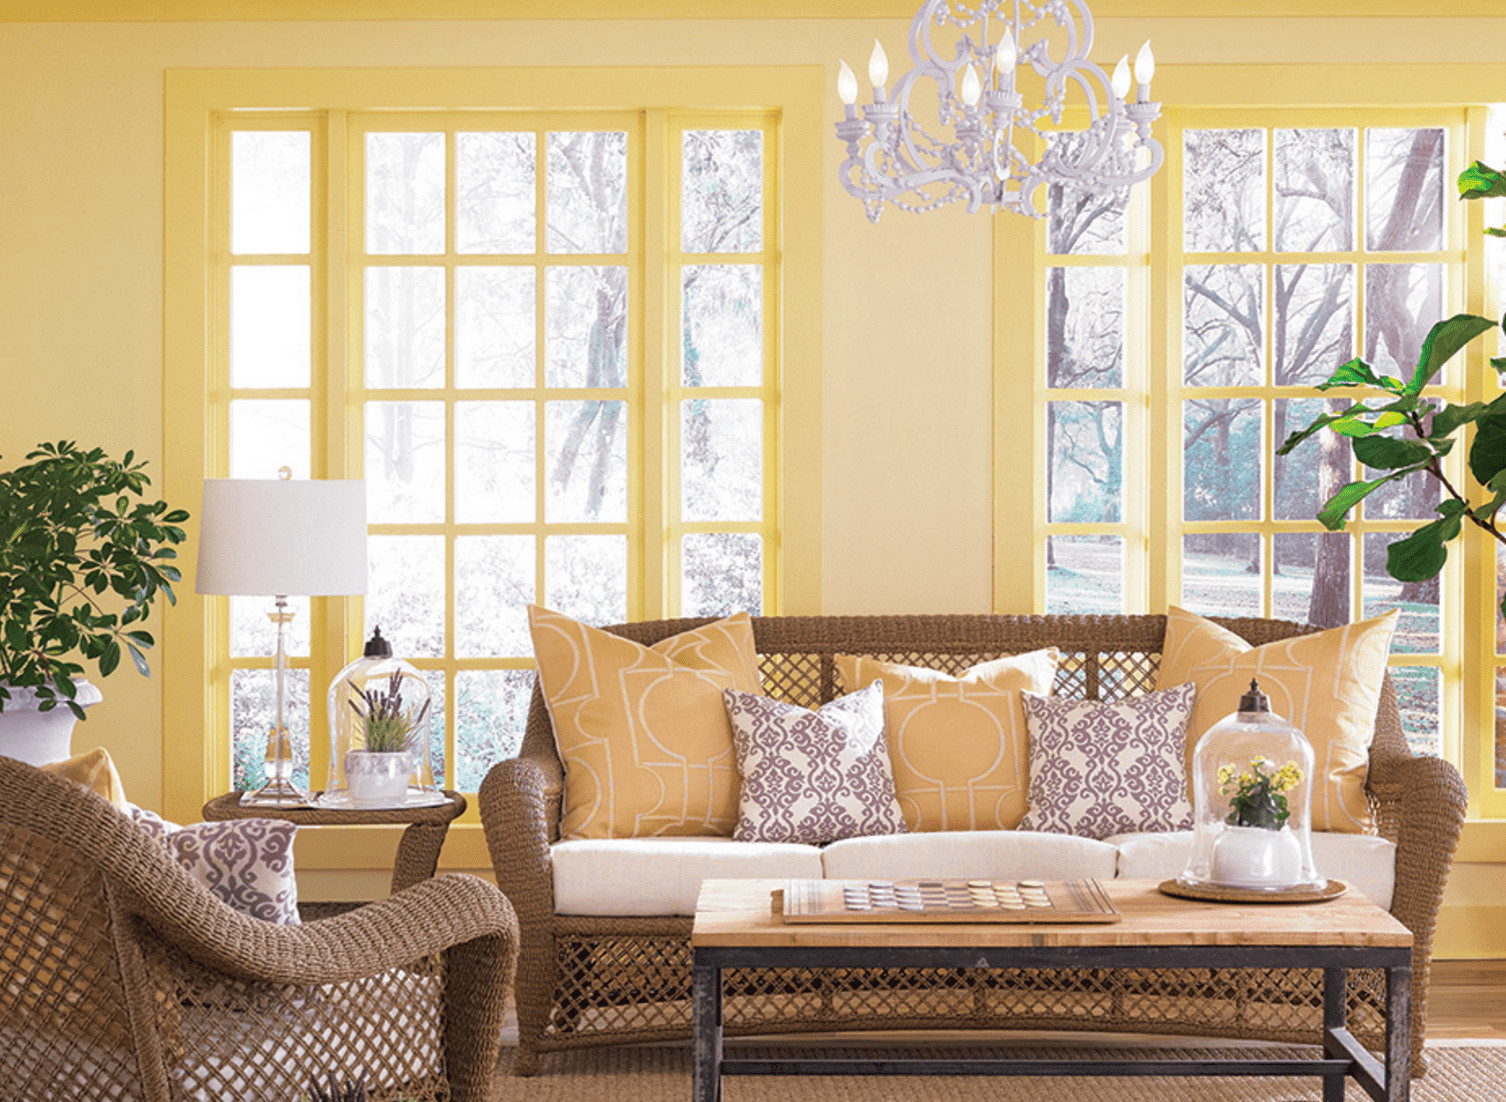 Top Living Room Paint Colors
 11 Best Neutral Paint Colors for Your Home